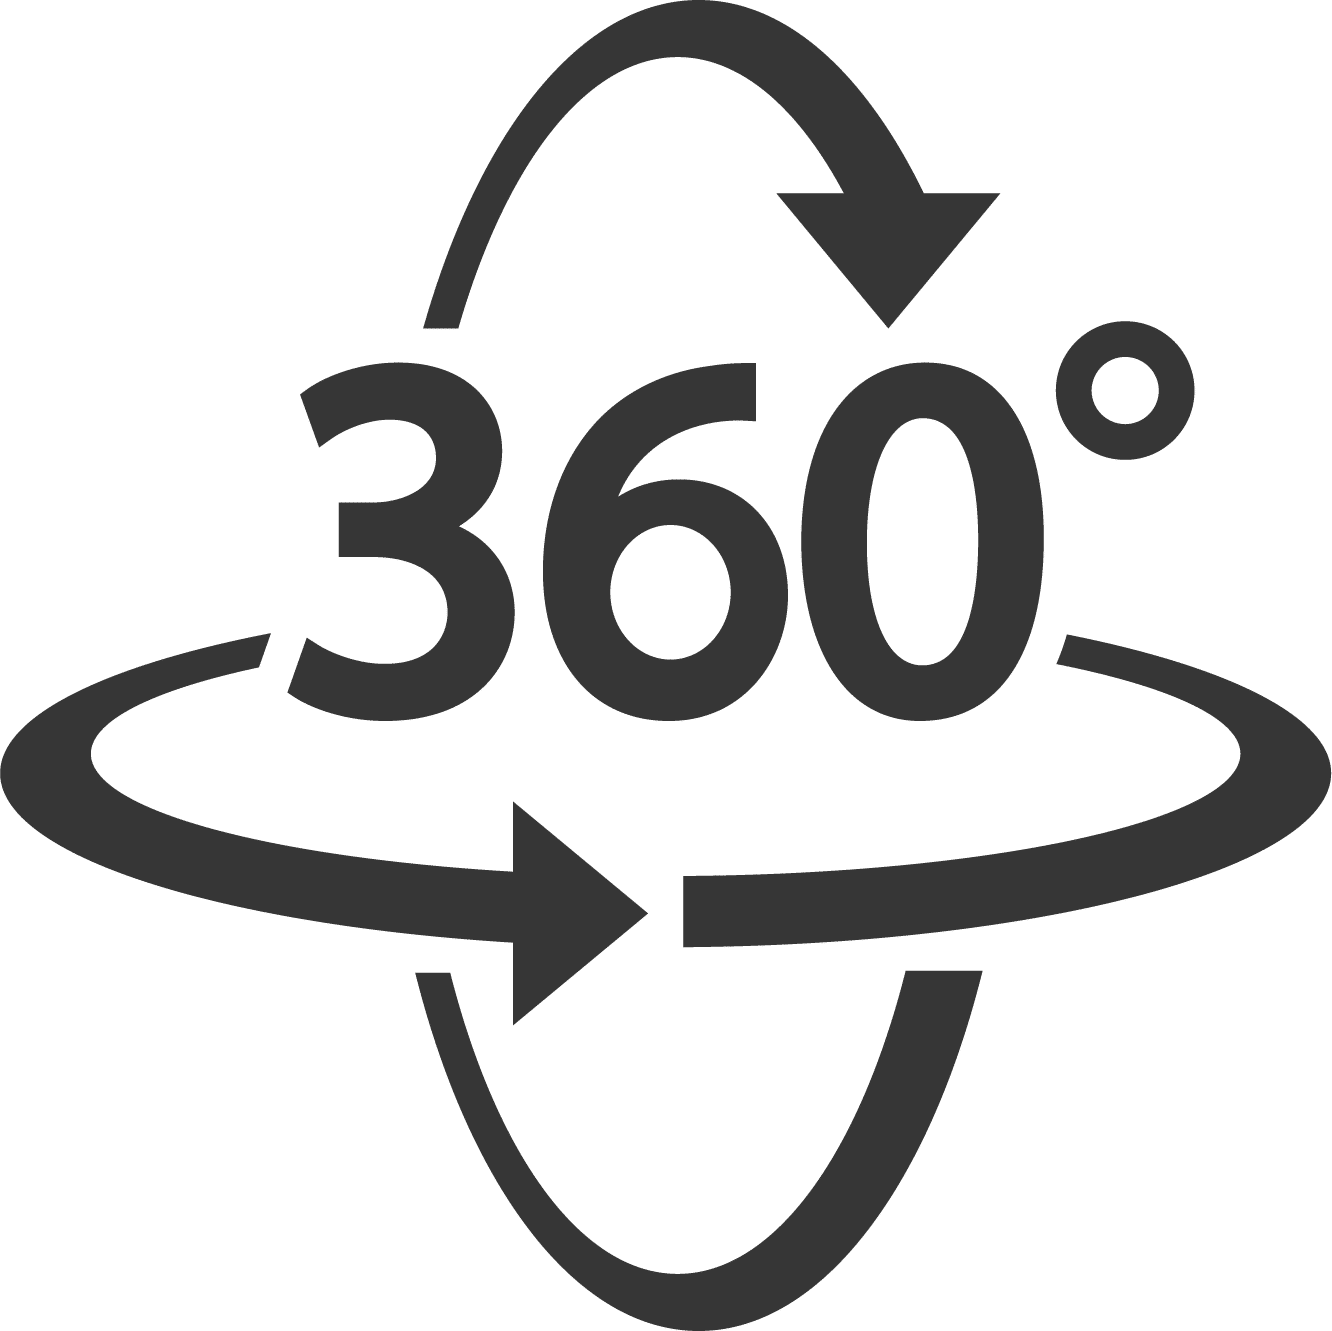 360° VR-Tour Symbolbild